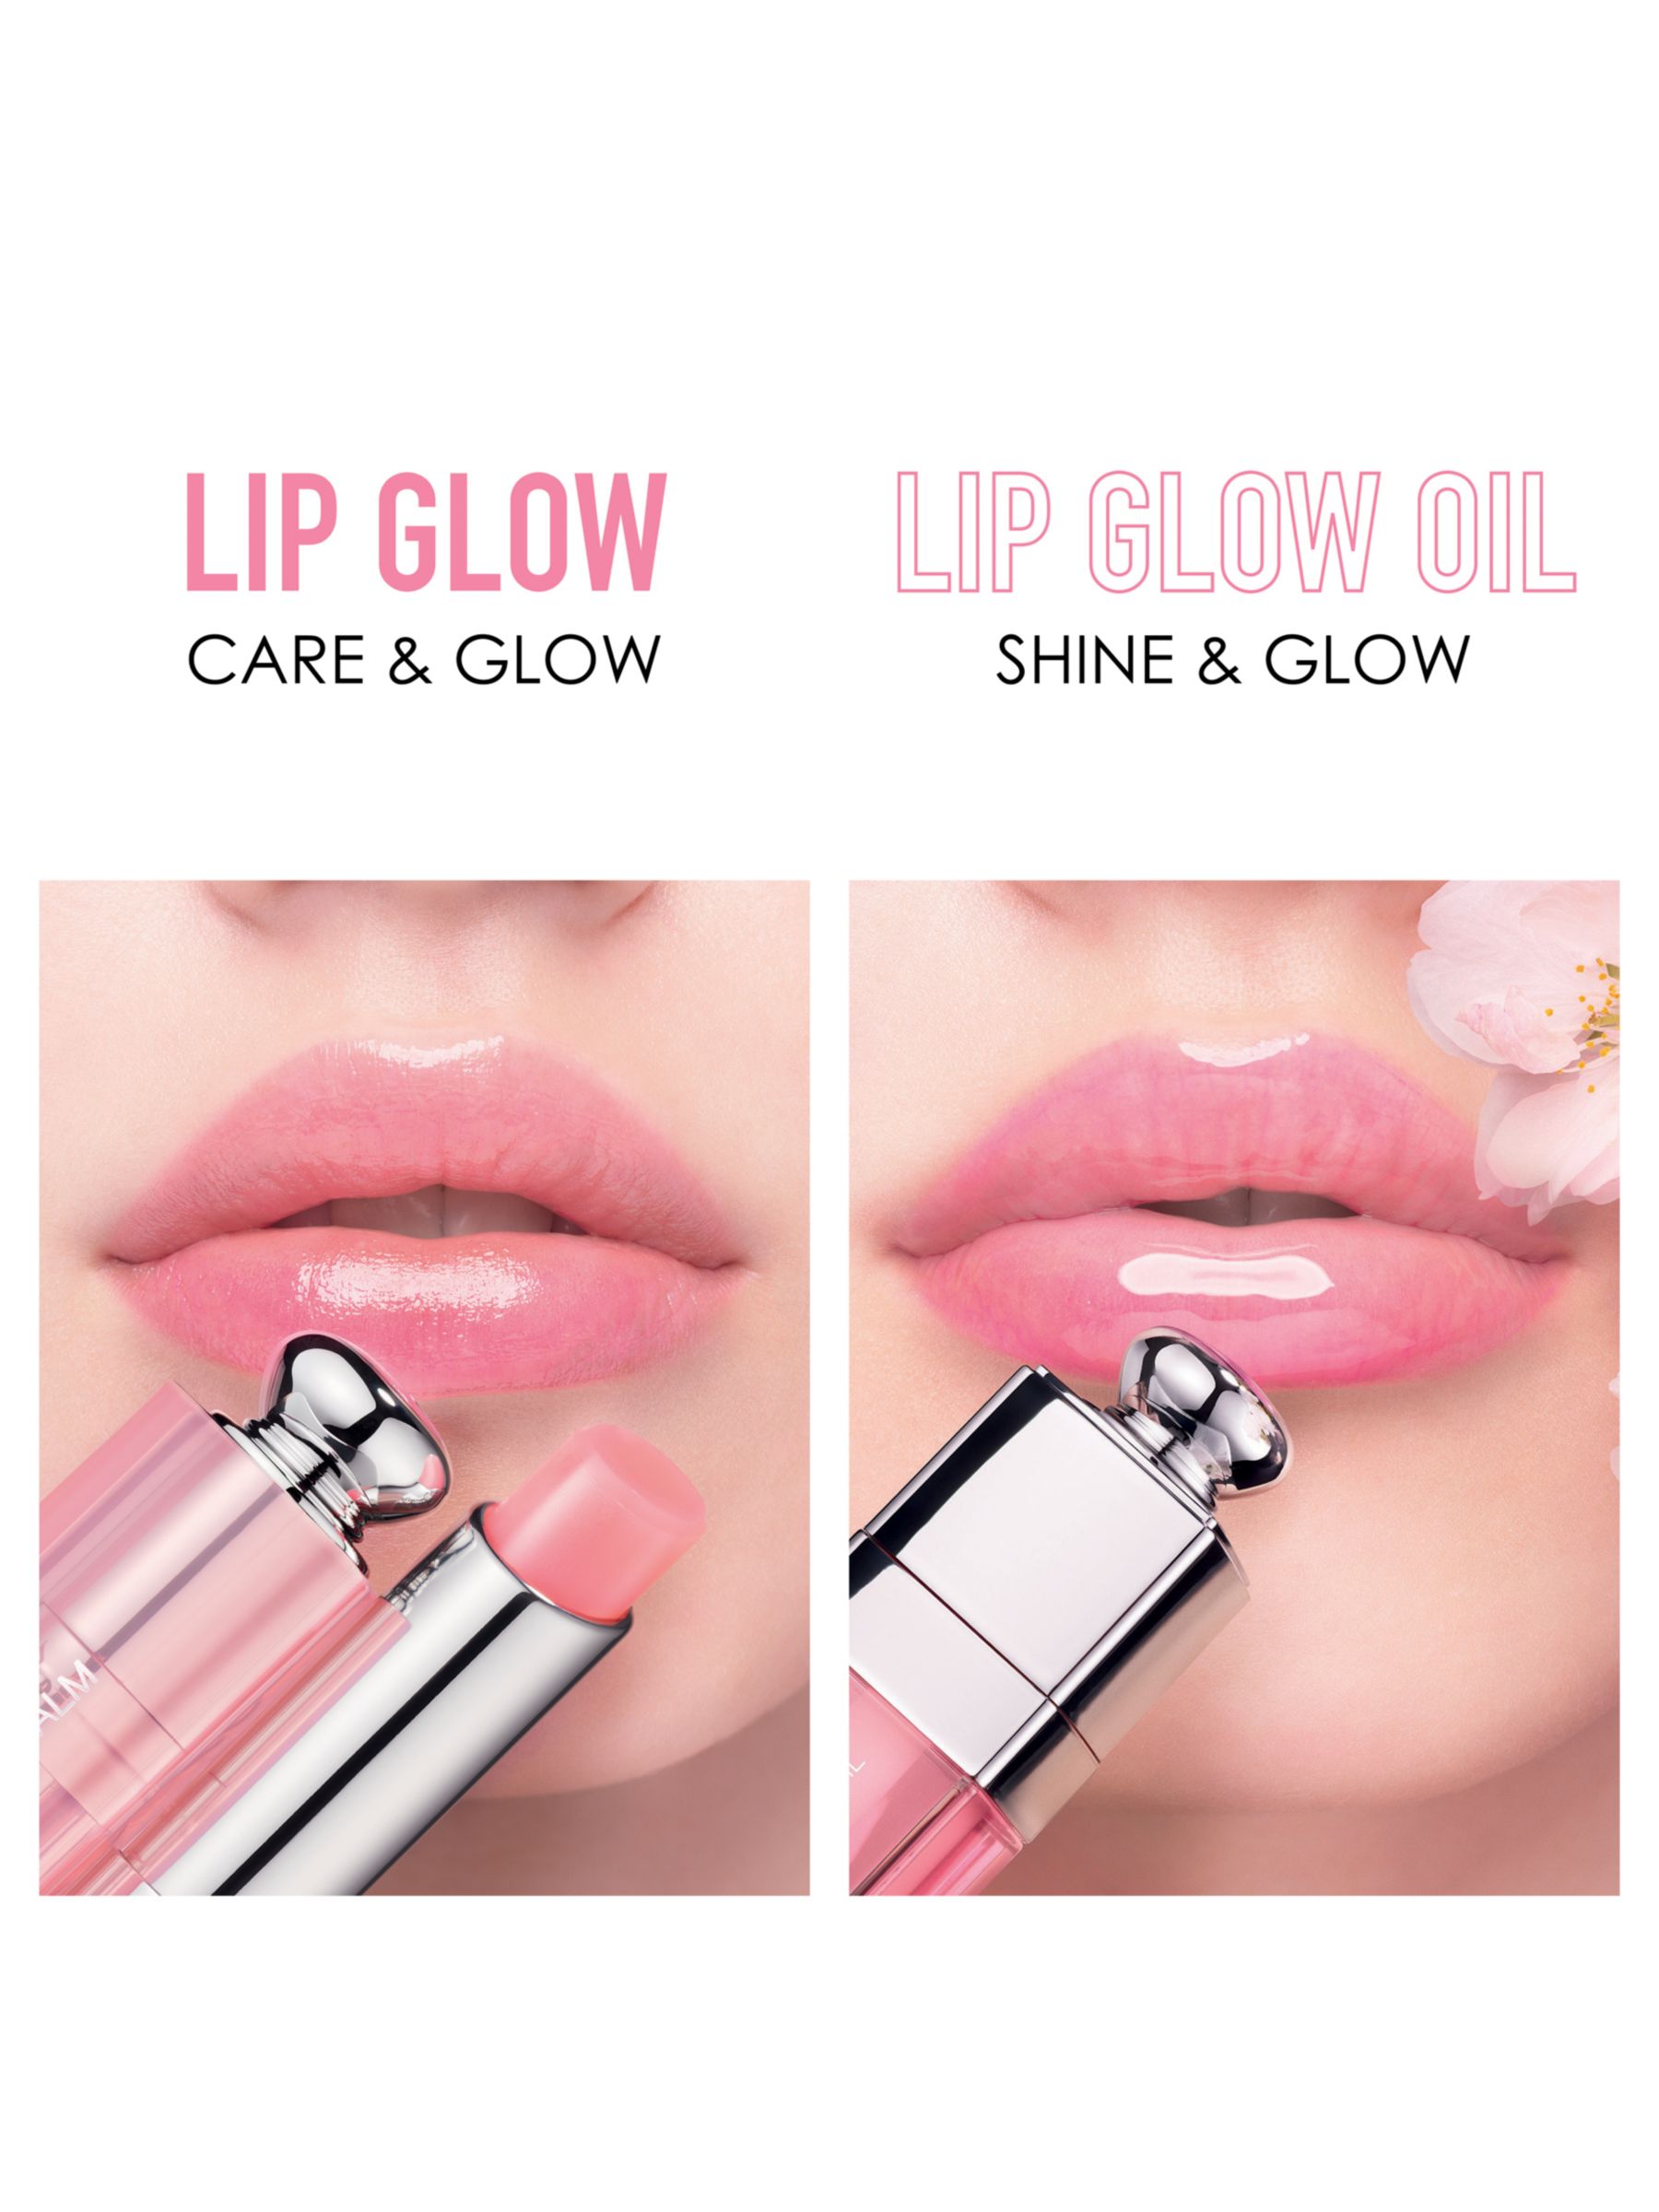 lip glow 001 pink dior